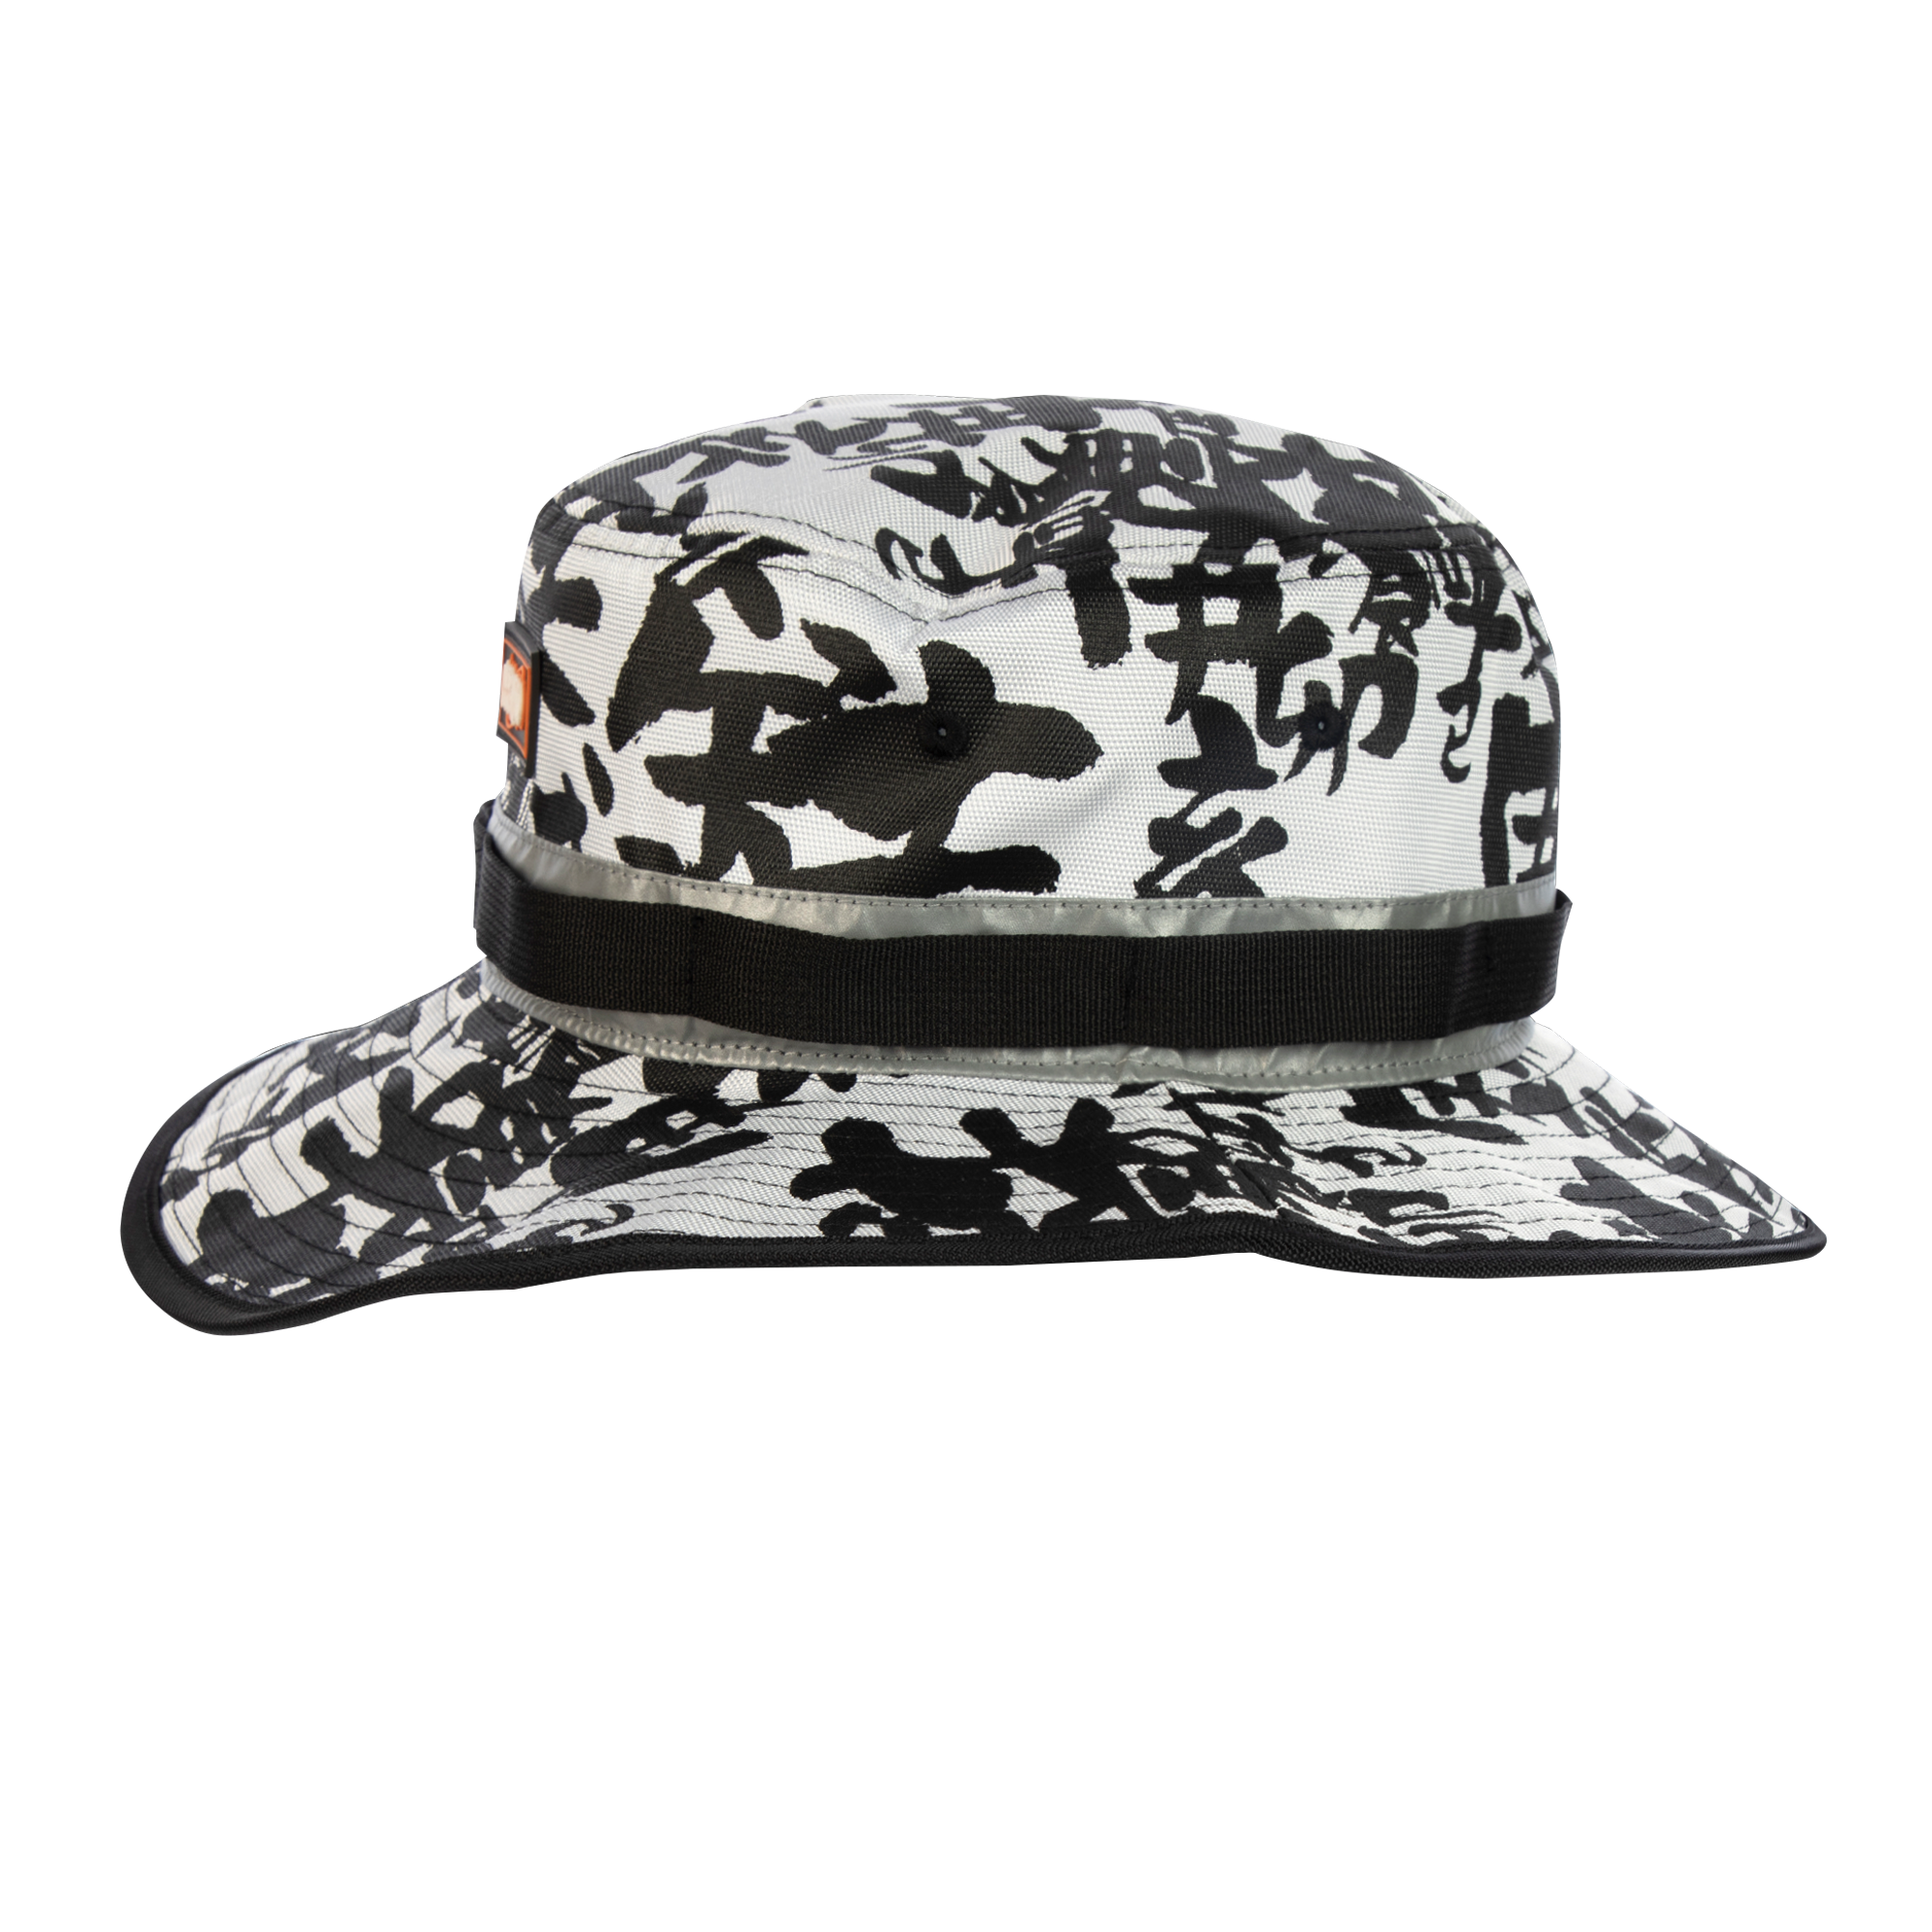 Naruto Allover Black & White Print Boonie Hat